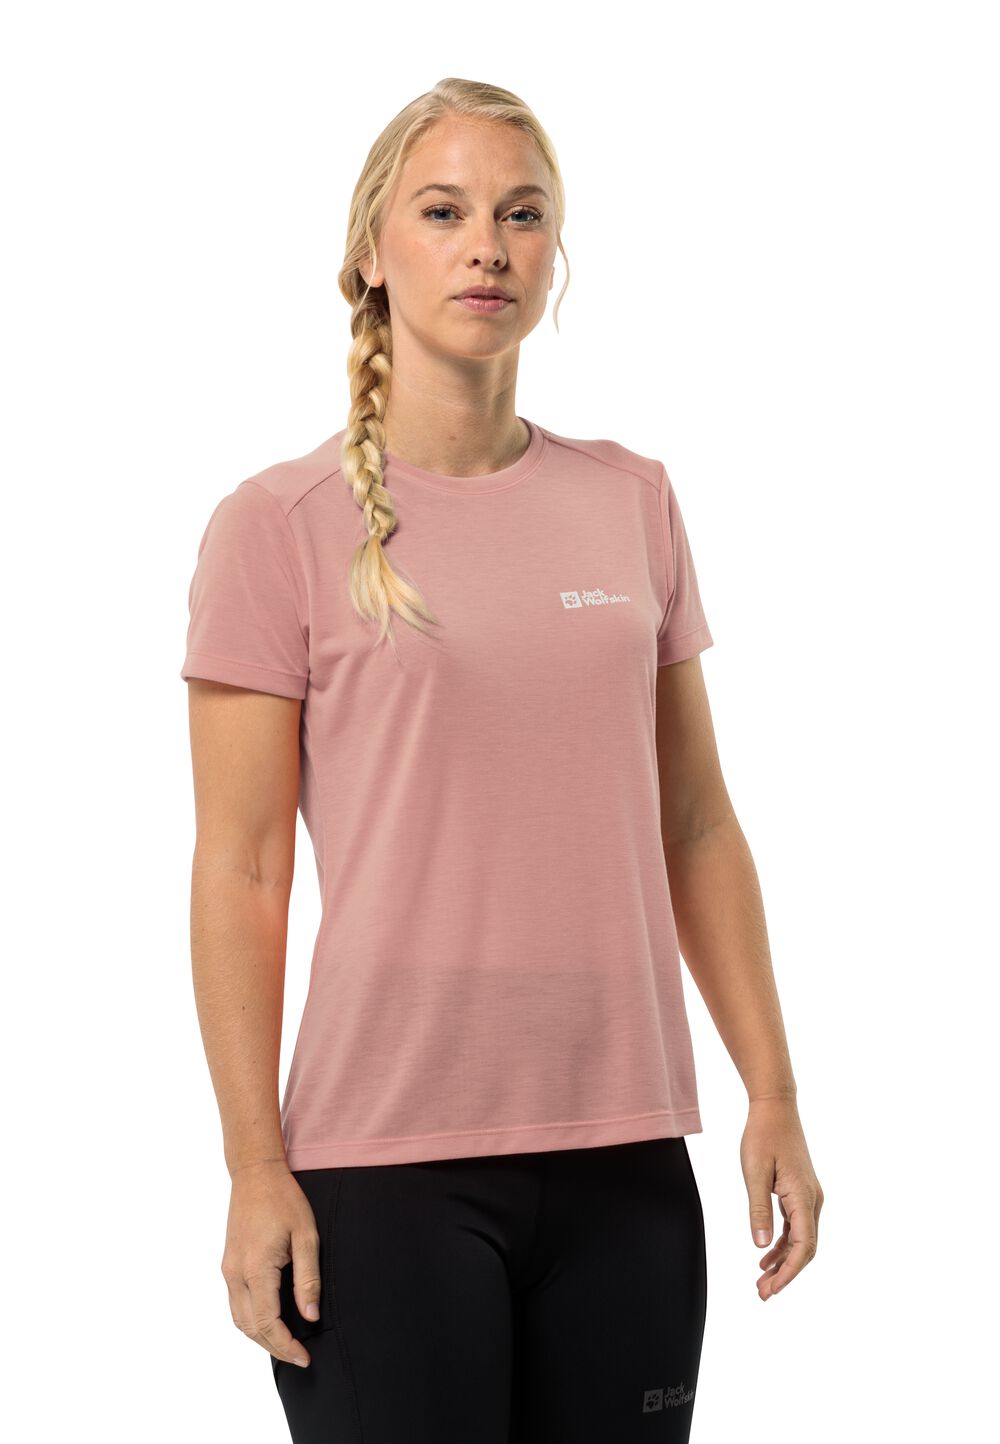 Jack Wolfskin Vonnan S S T-Shirt Women Functioneel shirt Dames M bruin rose dawn